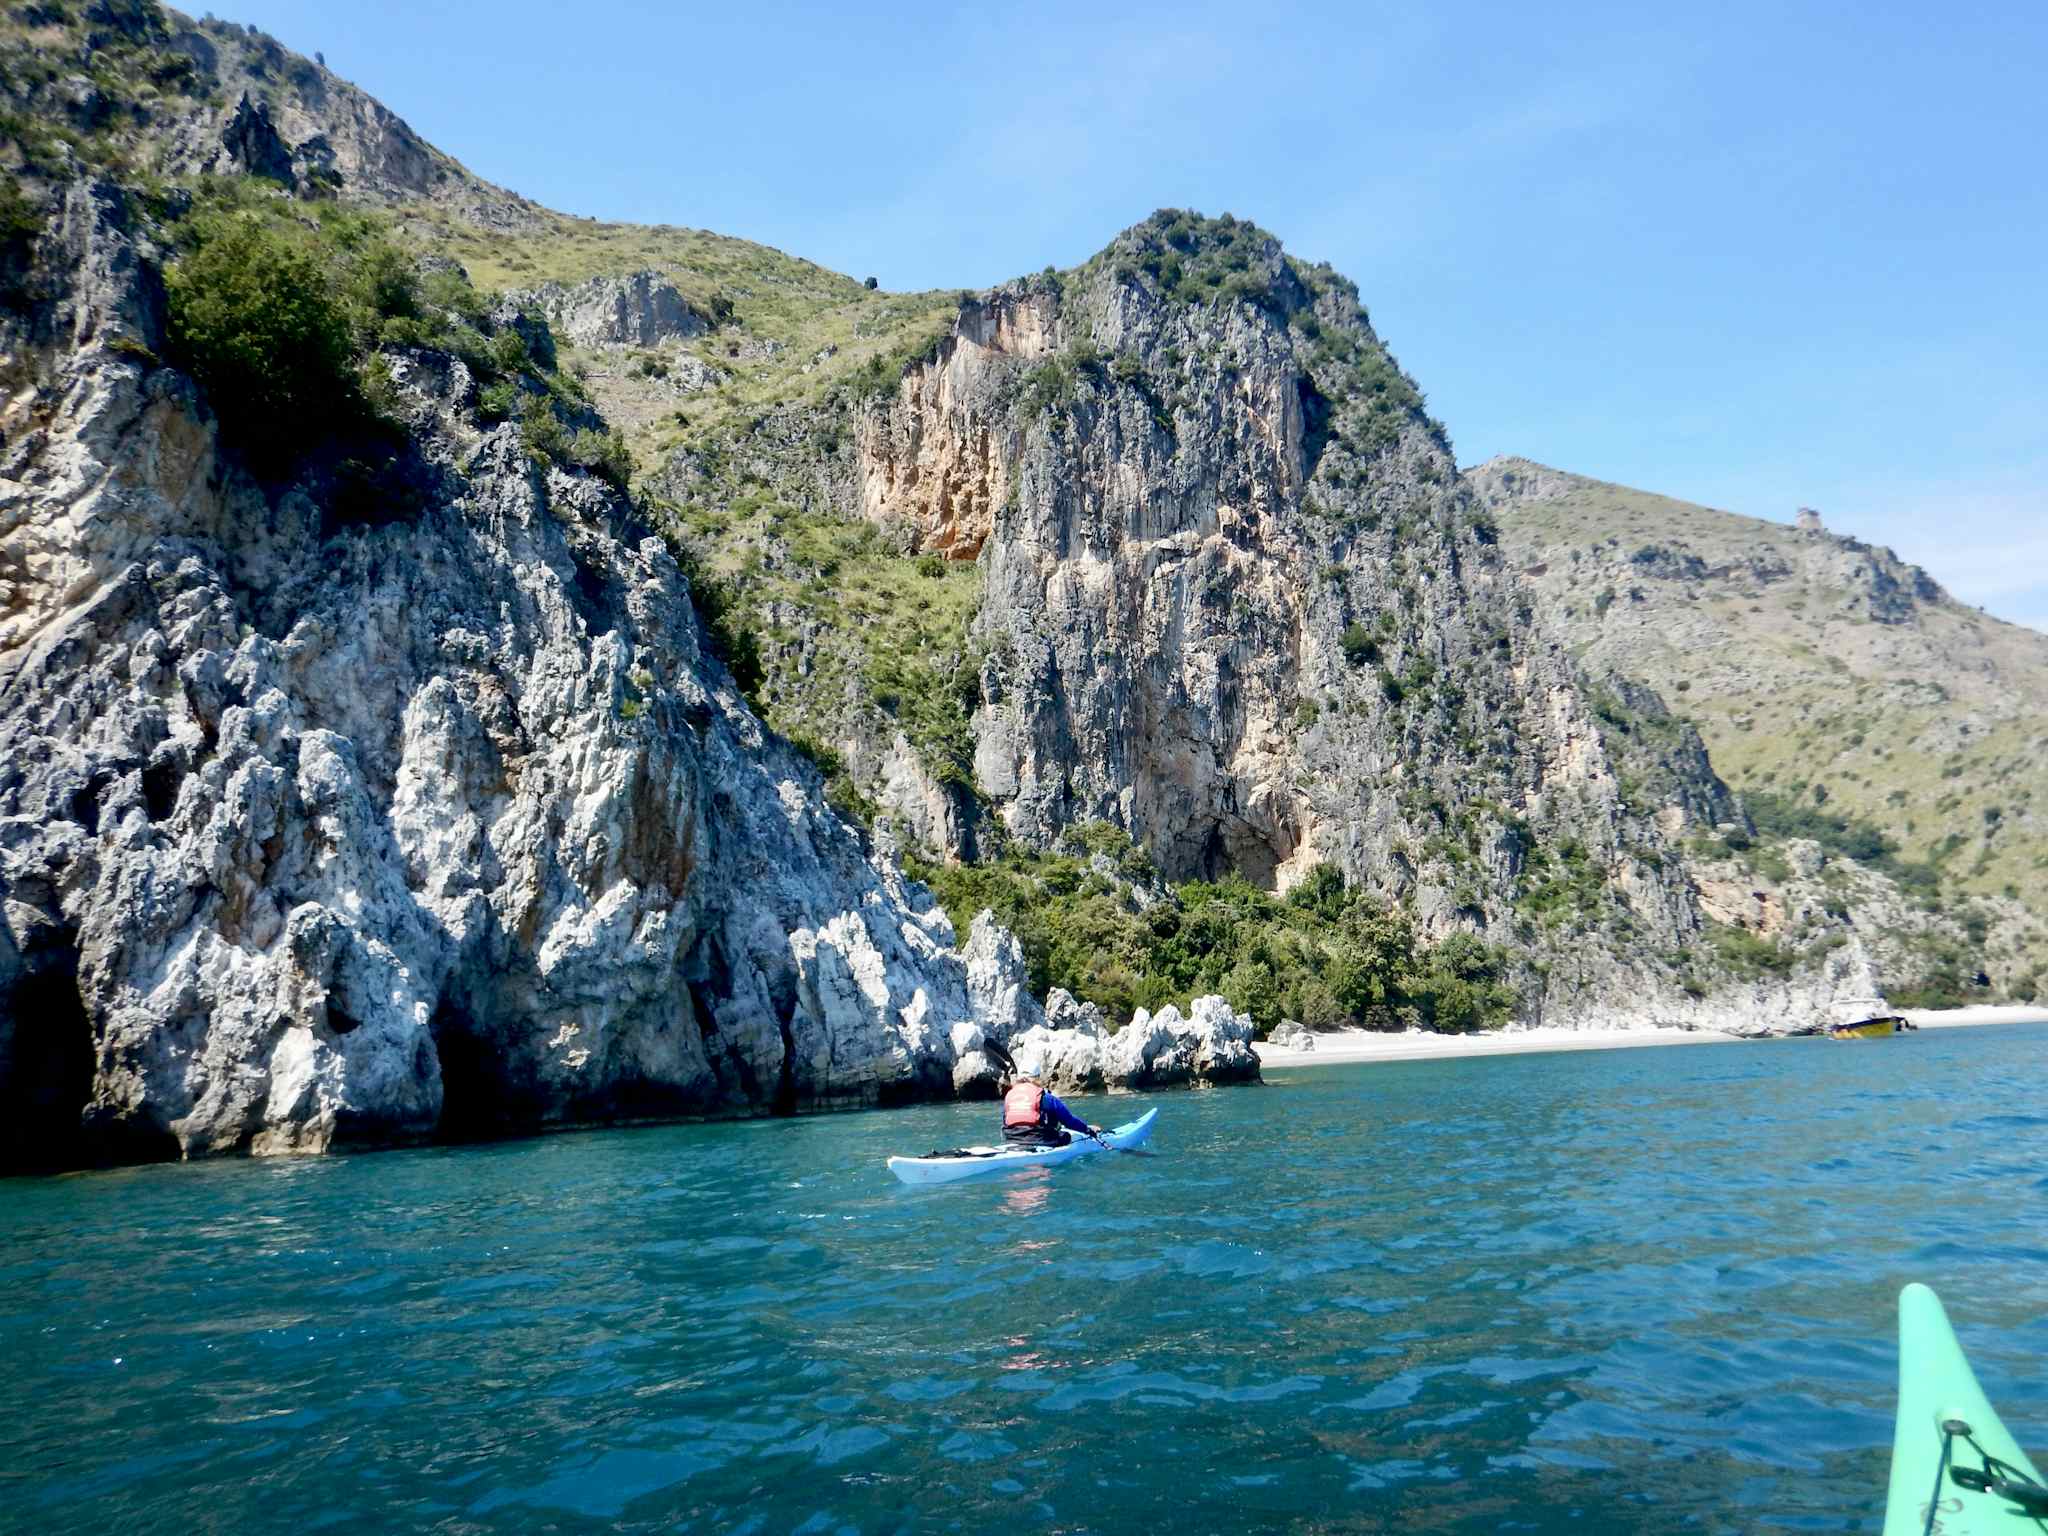 Sea kayaking along the Cilento Coast. Photo: Genius Loci